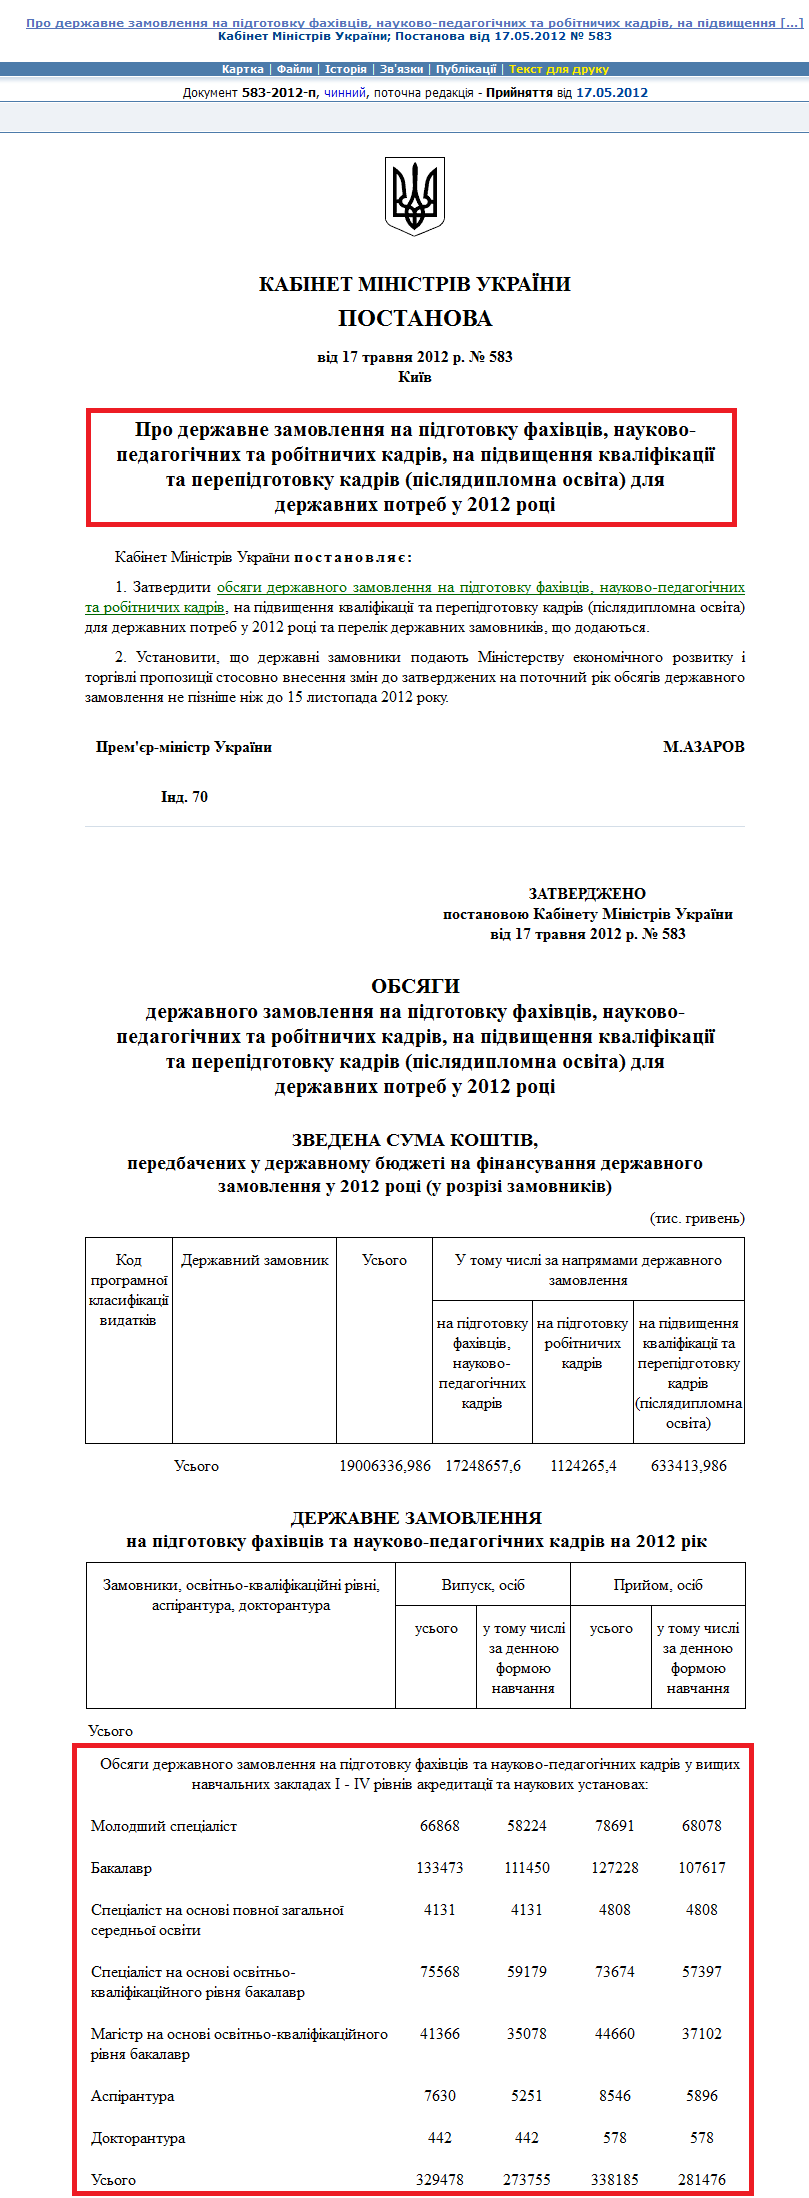 http://zakon2.rada.gov.ua/laws/show/583-2012-%D0%BF/print1329901621588623